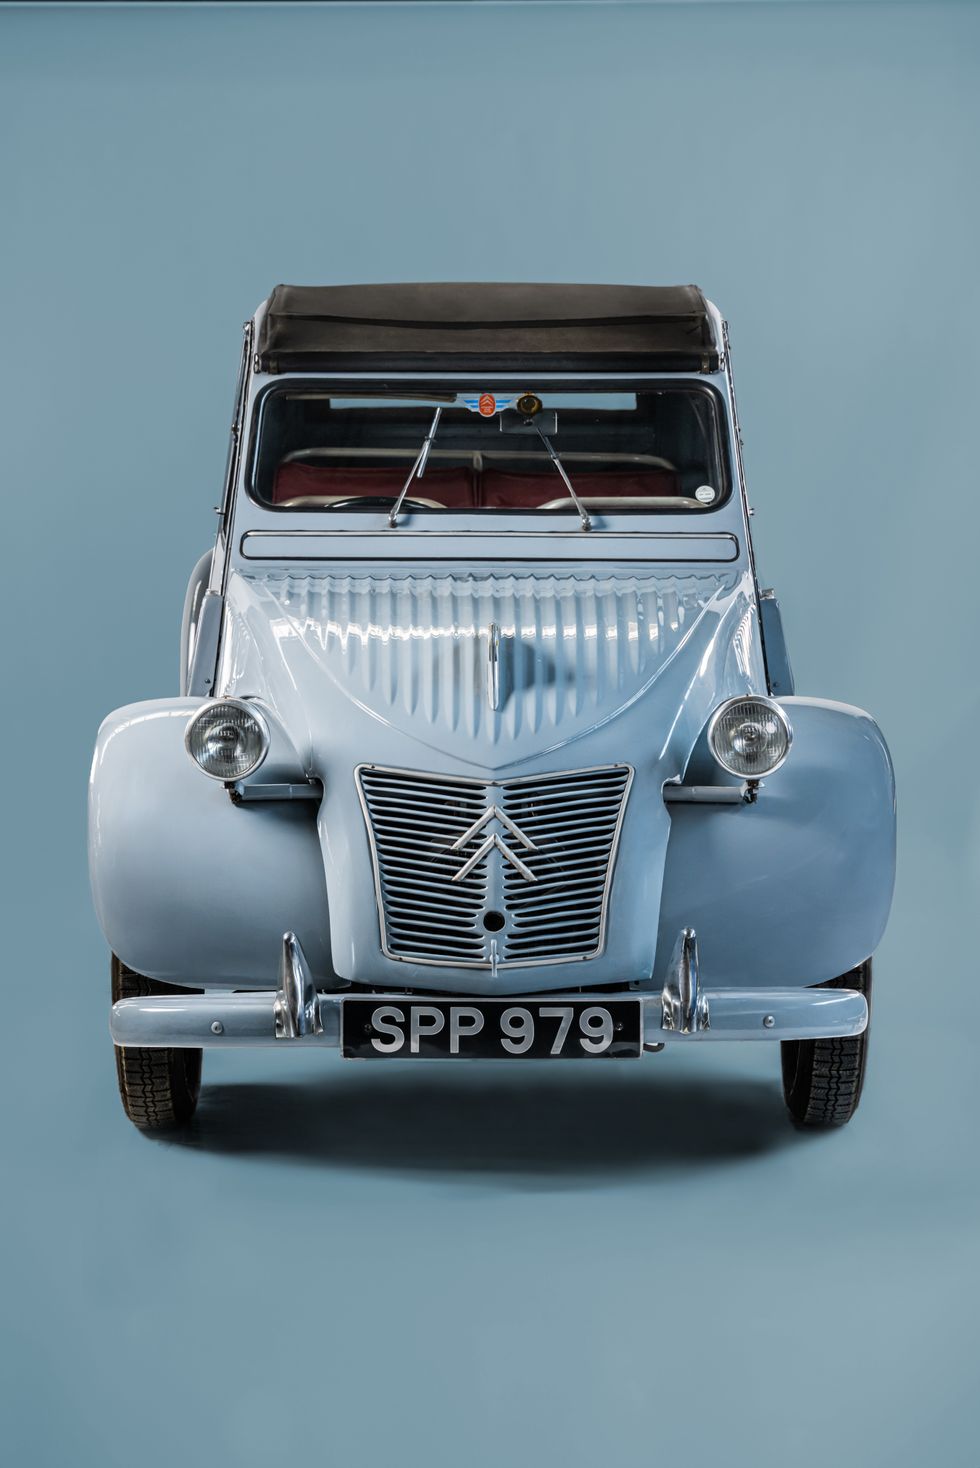 75 years of the Citroën 2CV